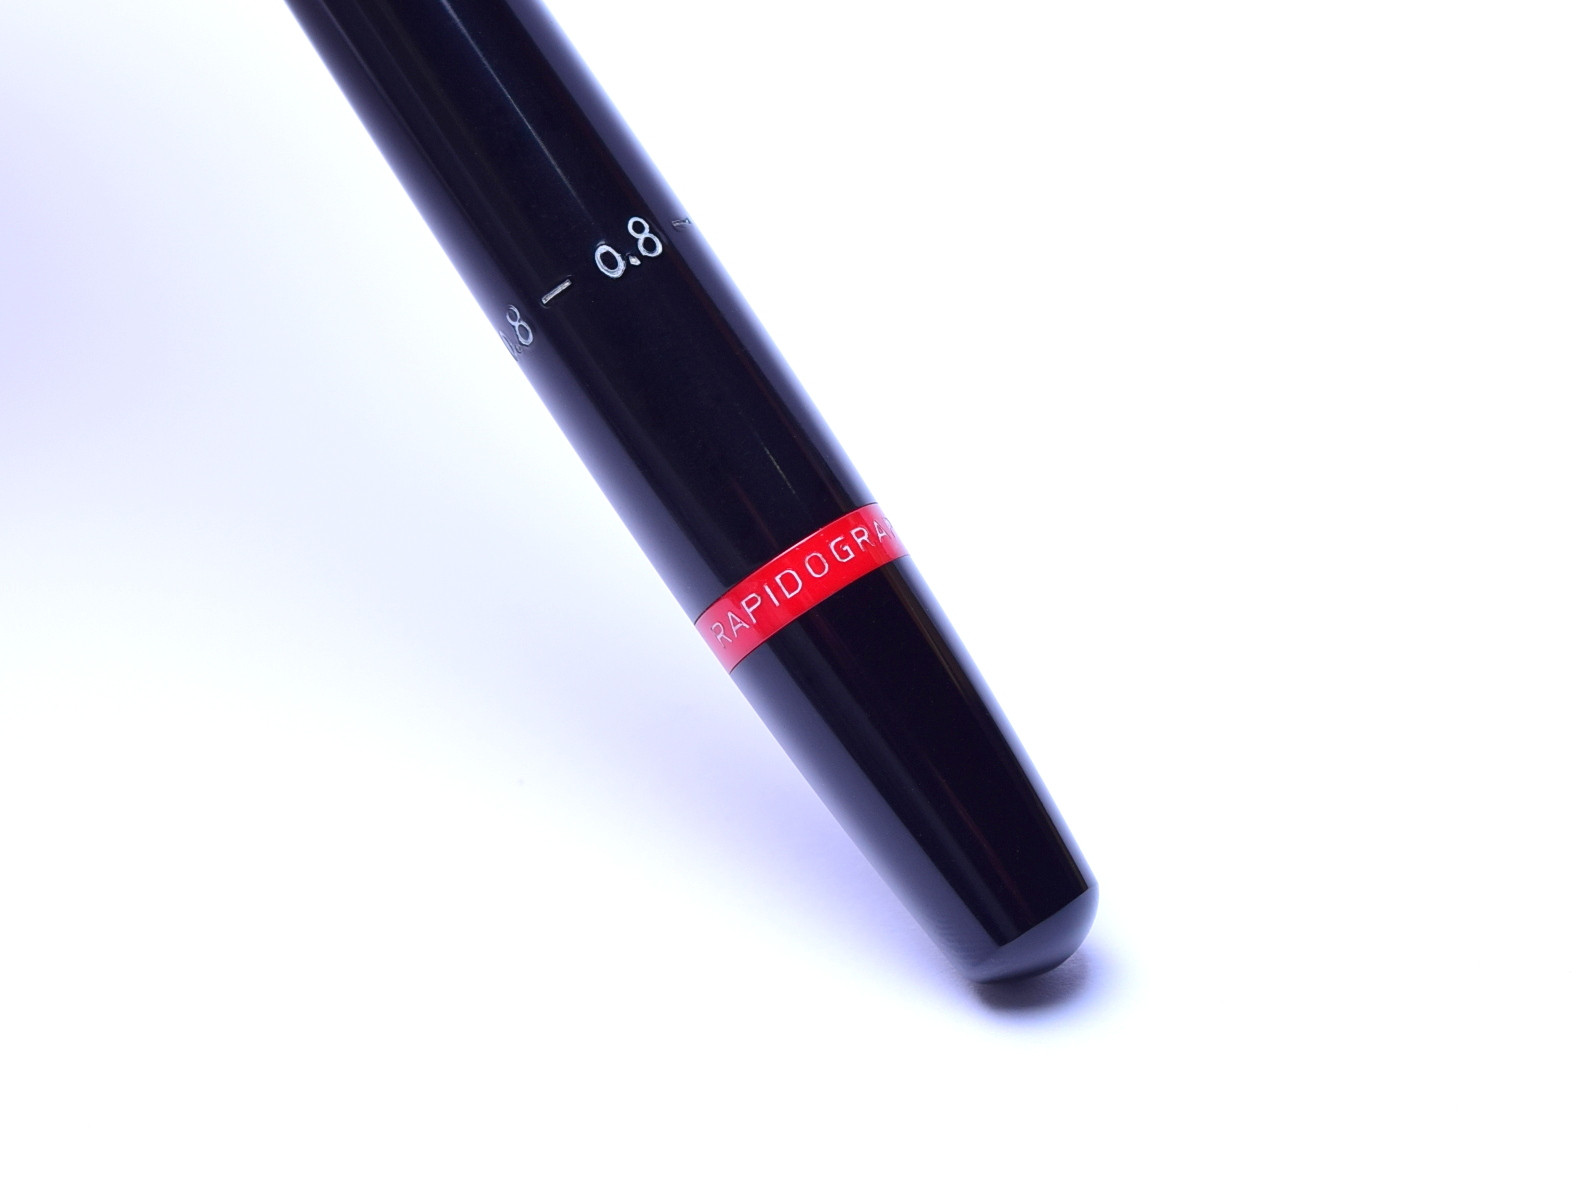 Rotring Rapidograph Tintenkuli Piston Filler Technical Drawing Pen 0.2  Refurbished New Old Stock 